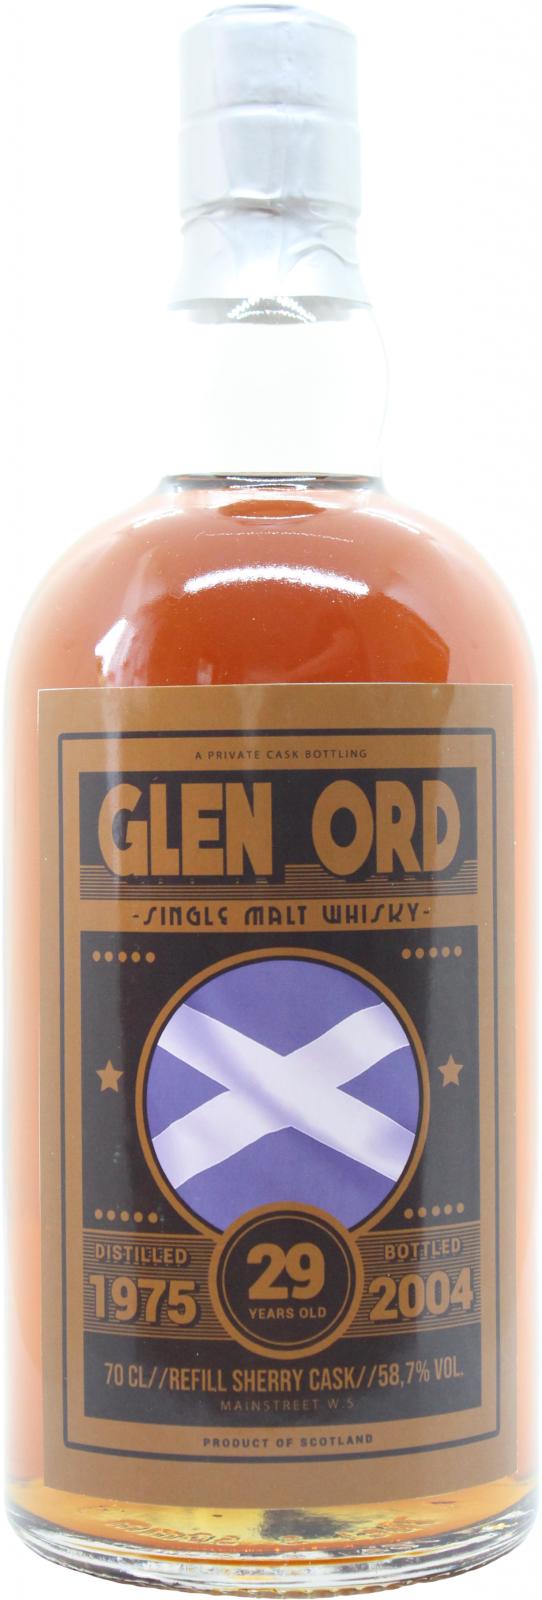 Glen Ord 1975 UD Refill Sherry Cask Private Bottling 58.7% 700ml